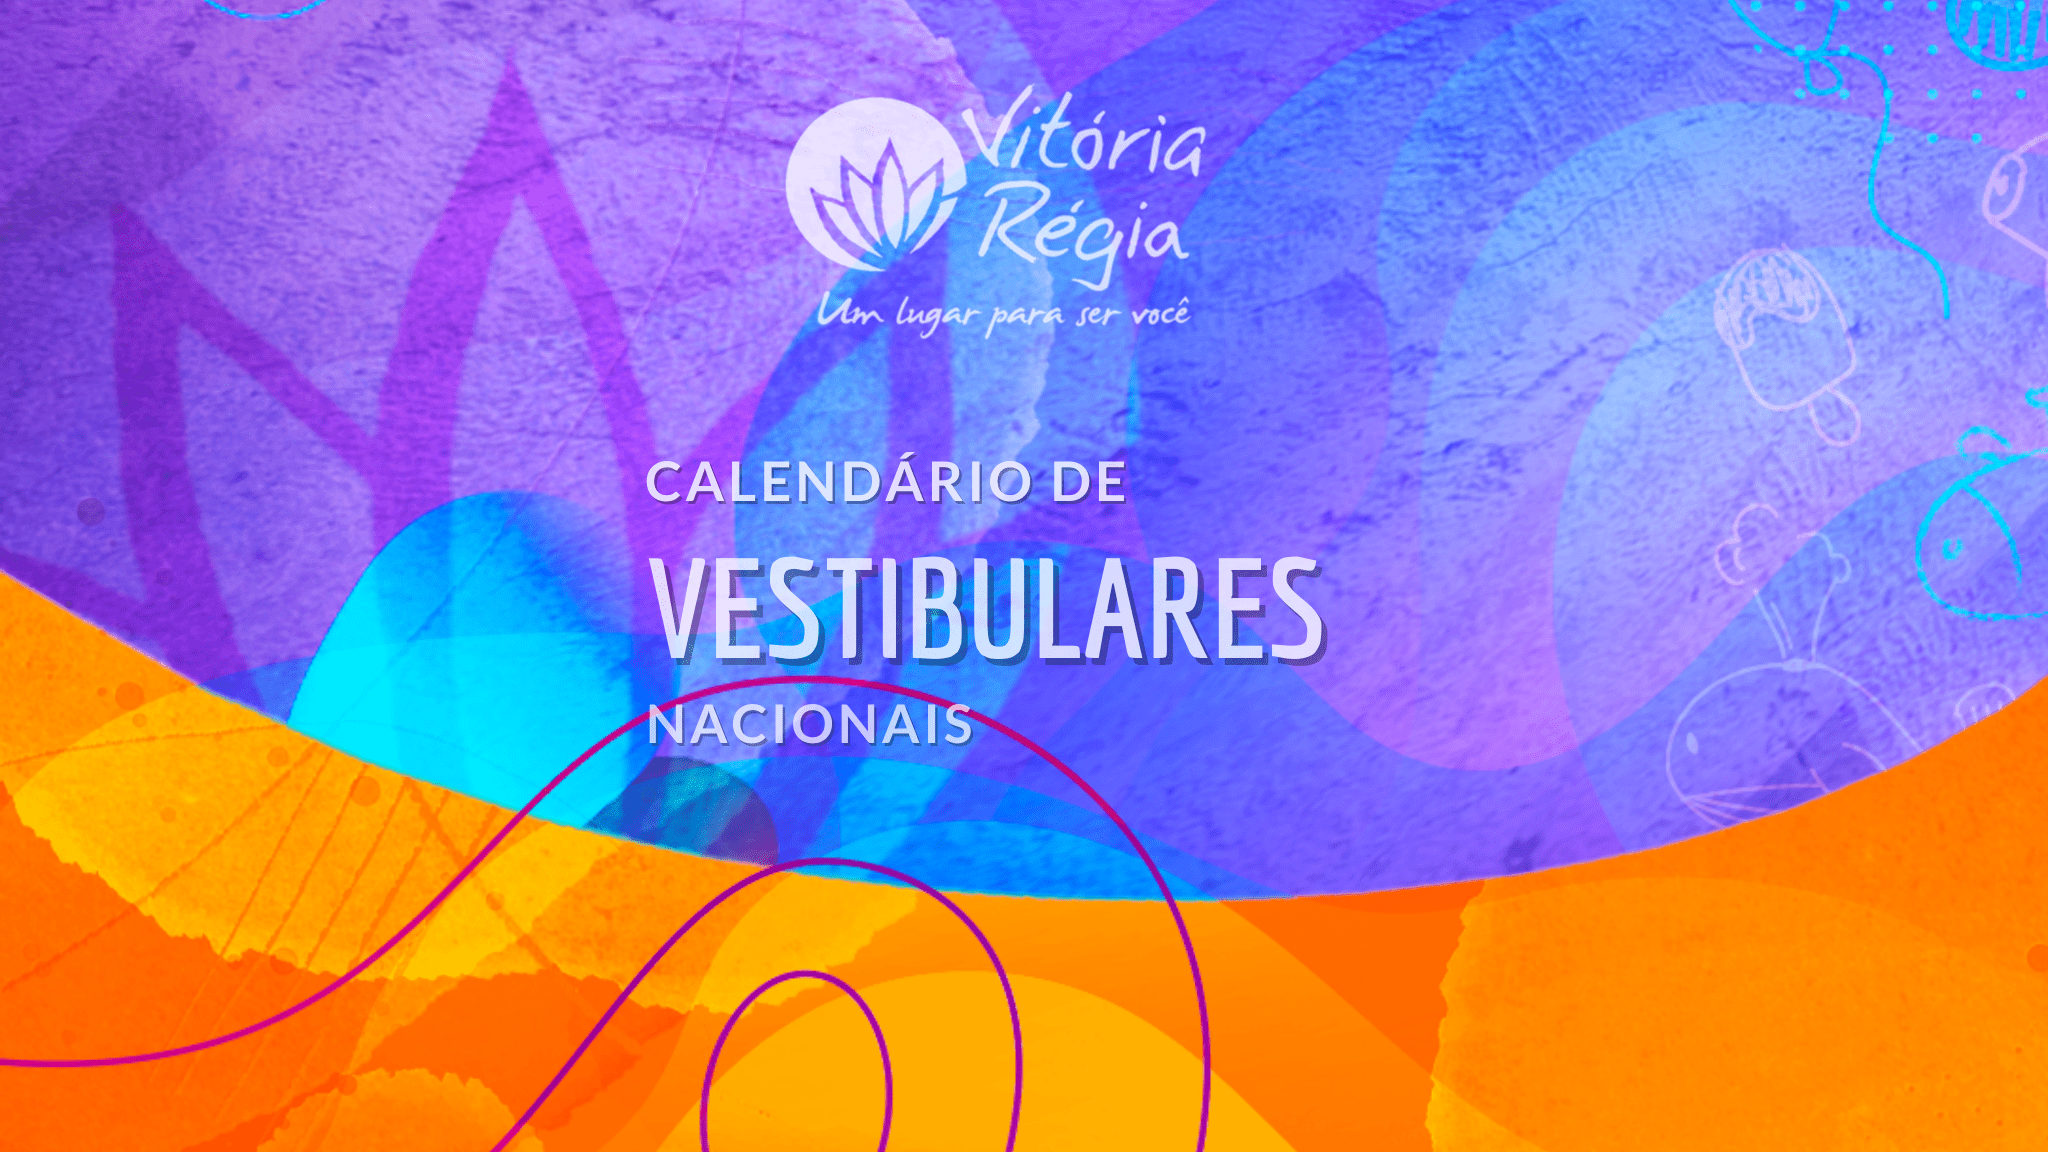 Vestibulares-Nacionais